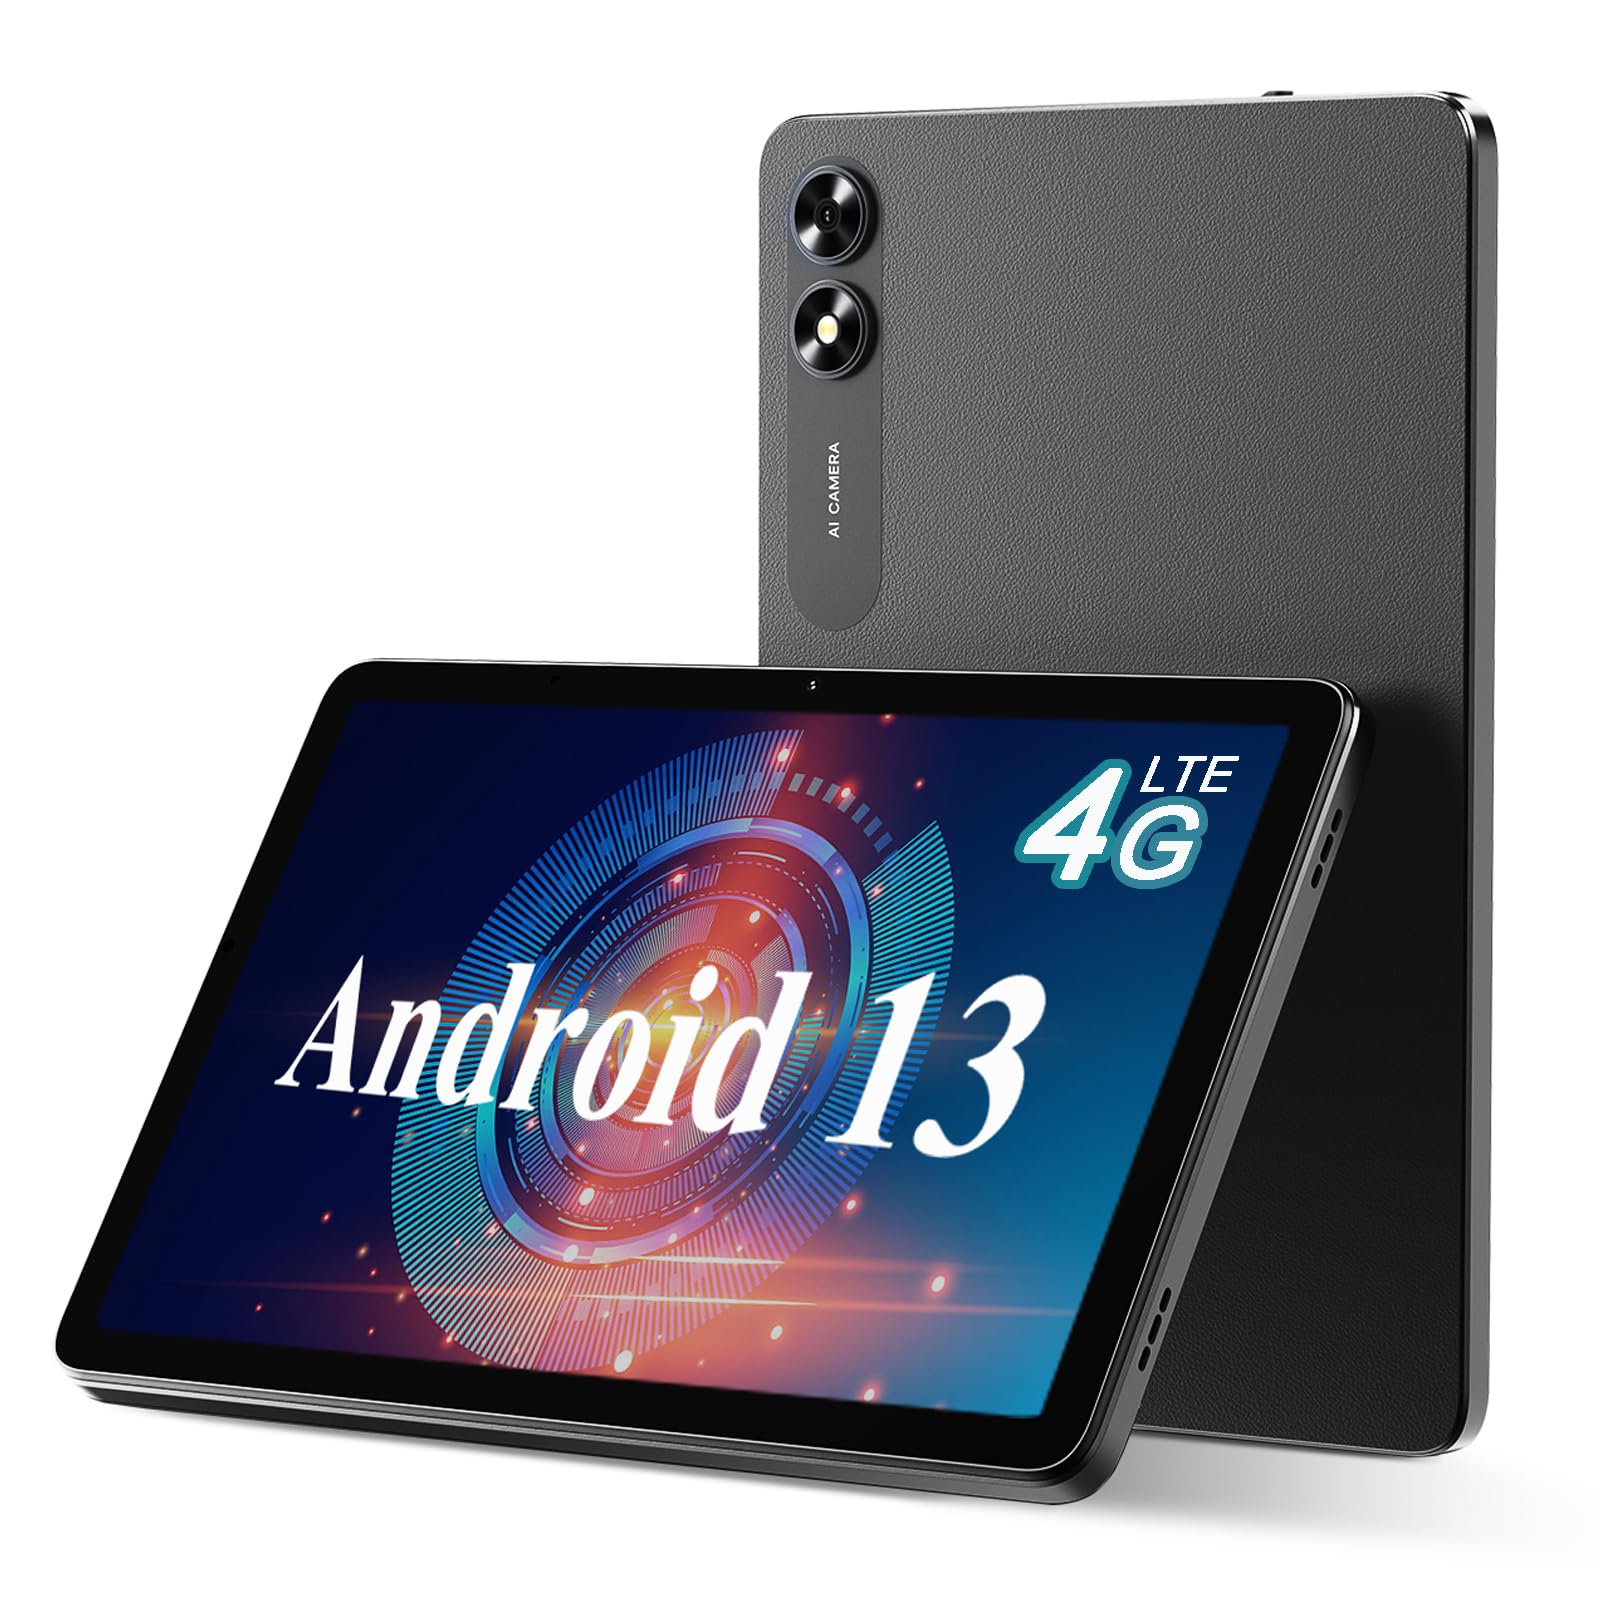 UMIDIgI g3 Tablet Pc, 101 inch Tablet g3 Tab 3gB +32gB Android 13 6000mAh up to 256gB MT8766 Quad-core 8MP Rear camera Face ID U